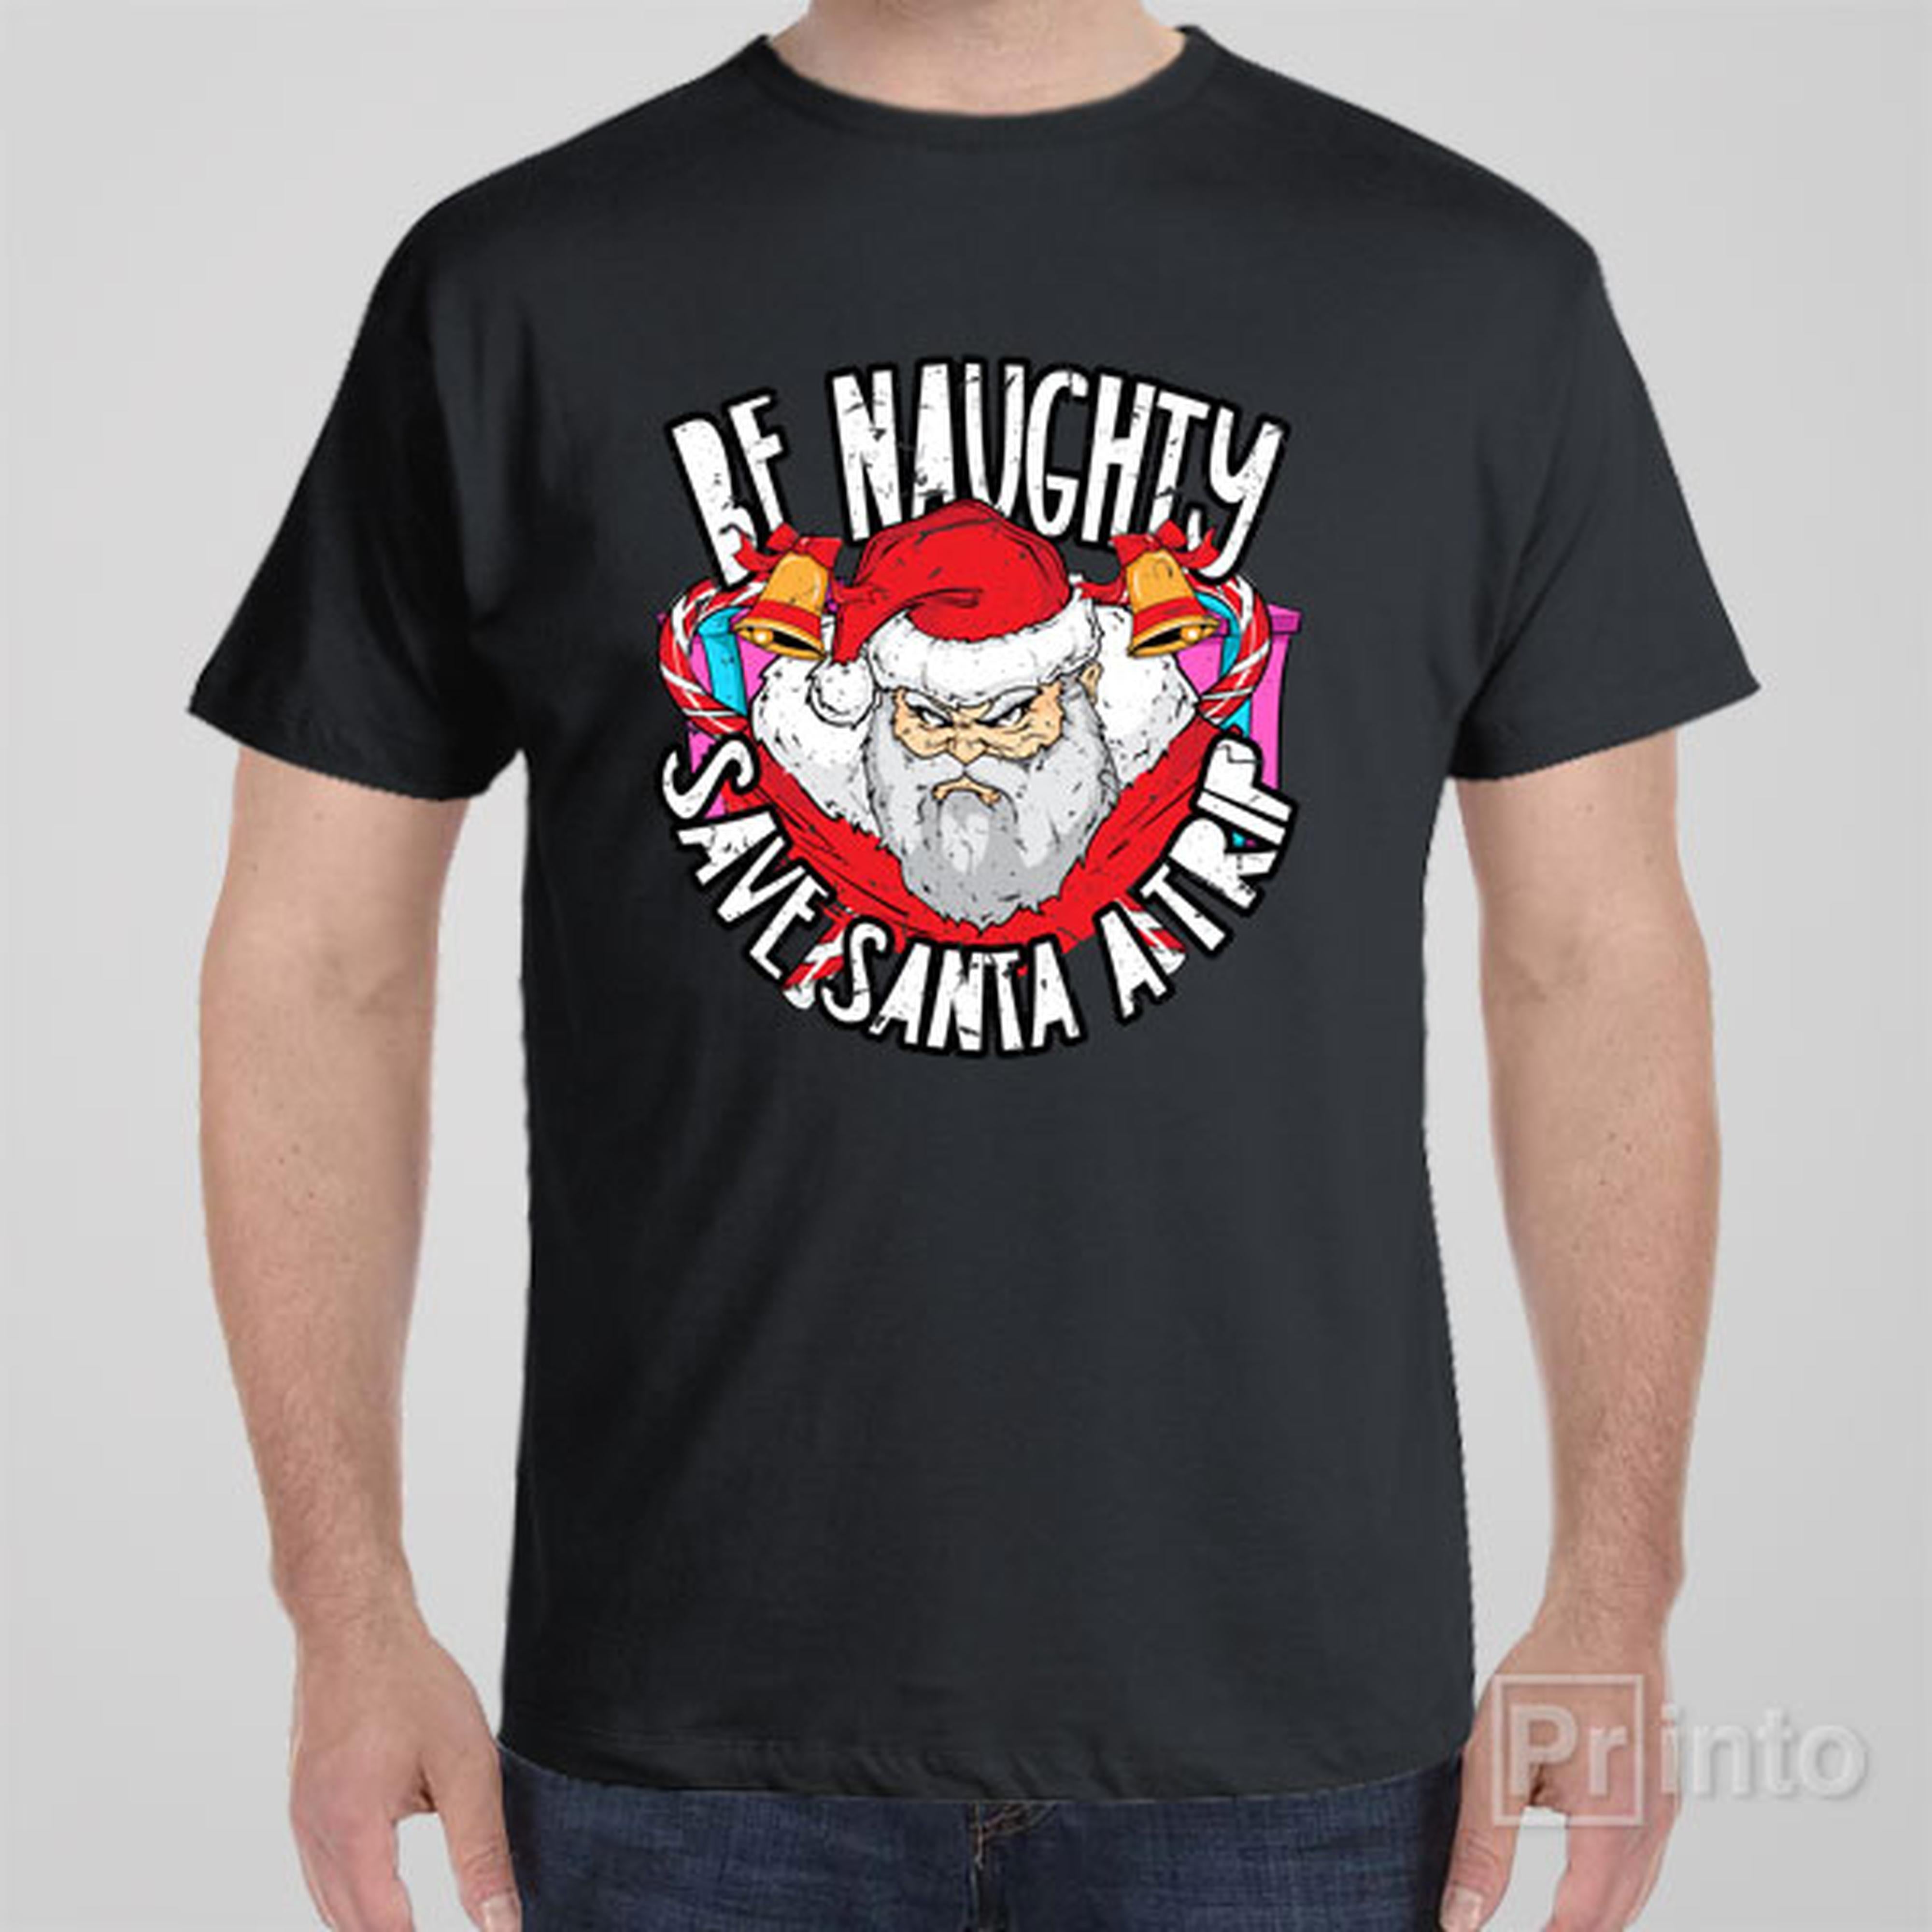 save-santa-a-trip-t-shirt